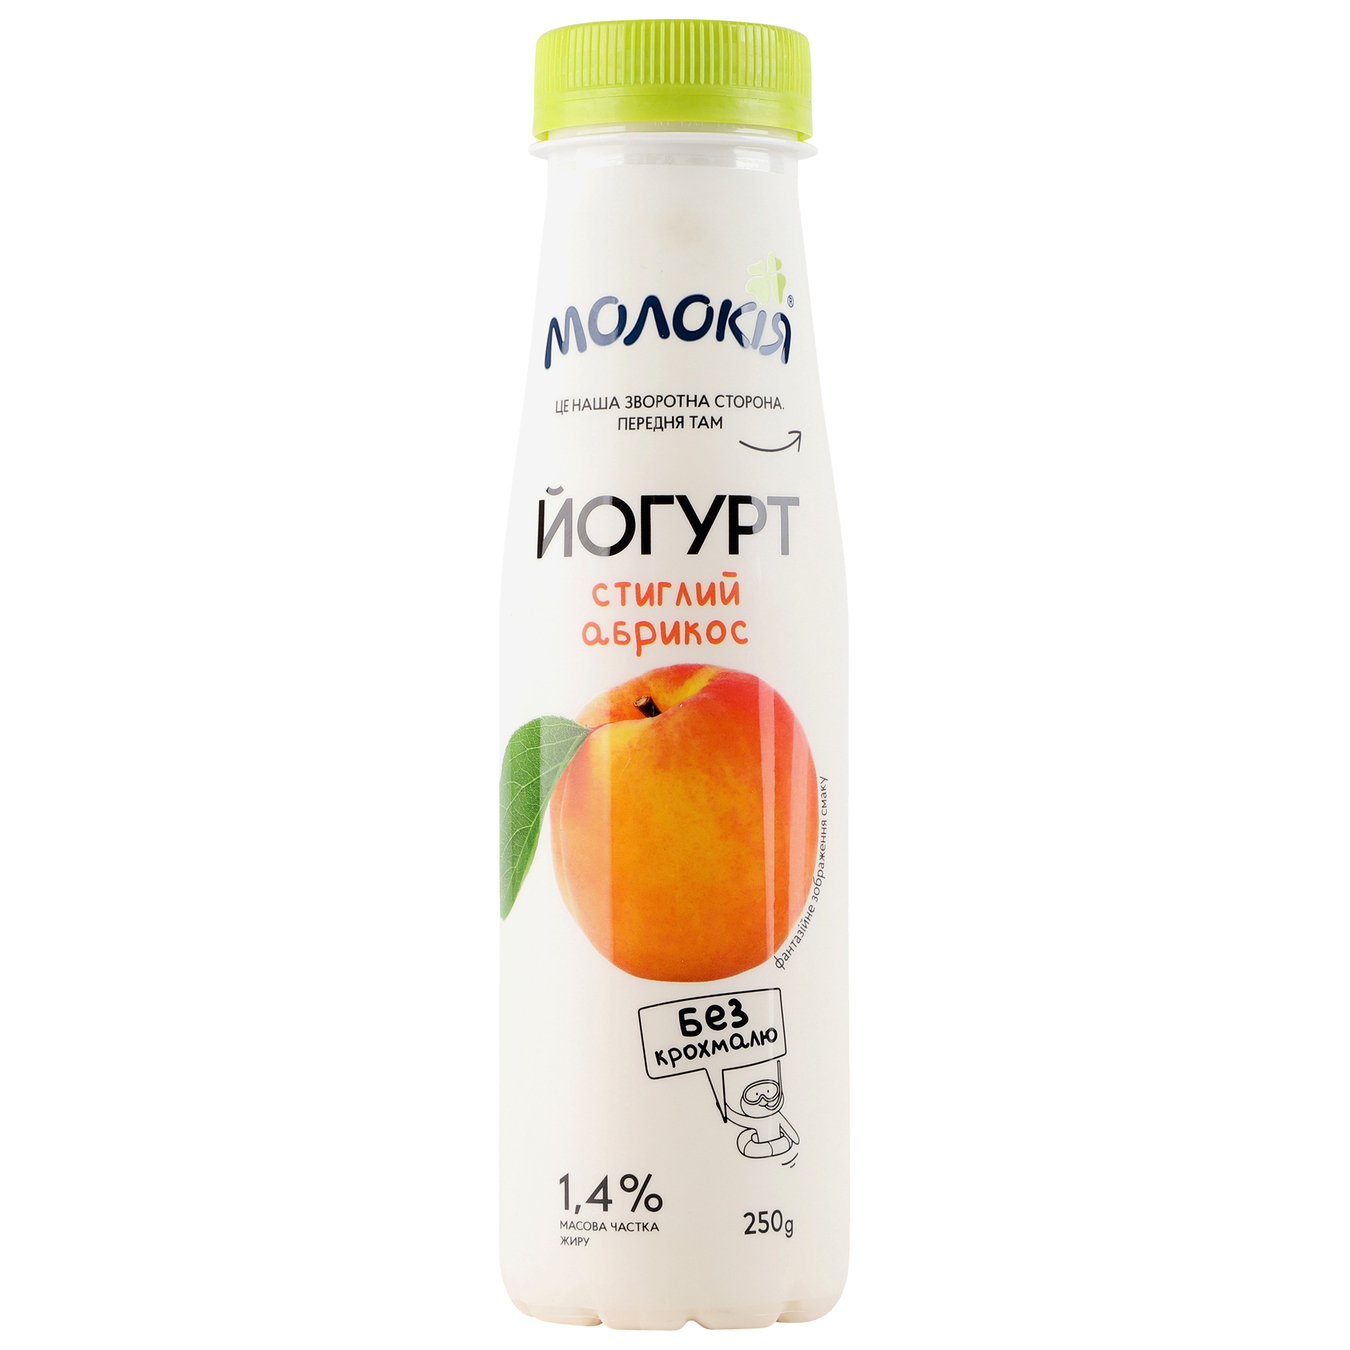 Yogurt Molokiya apricot bottle 1.4% 250g